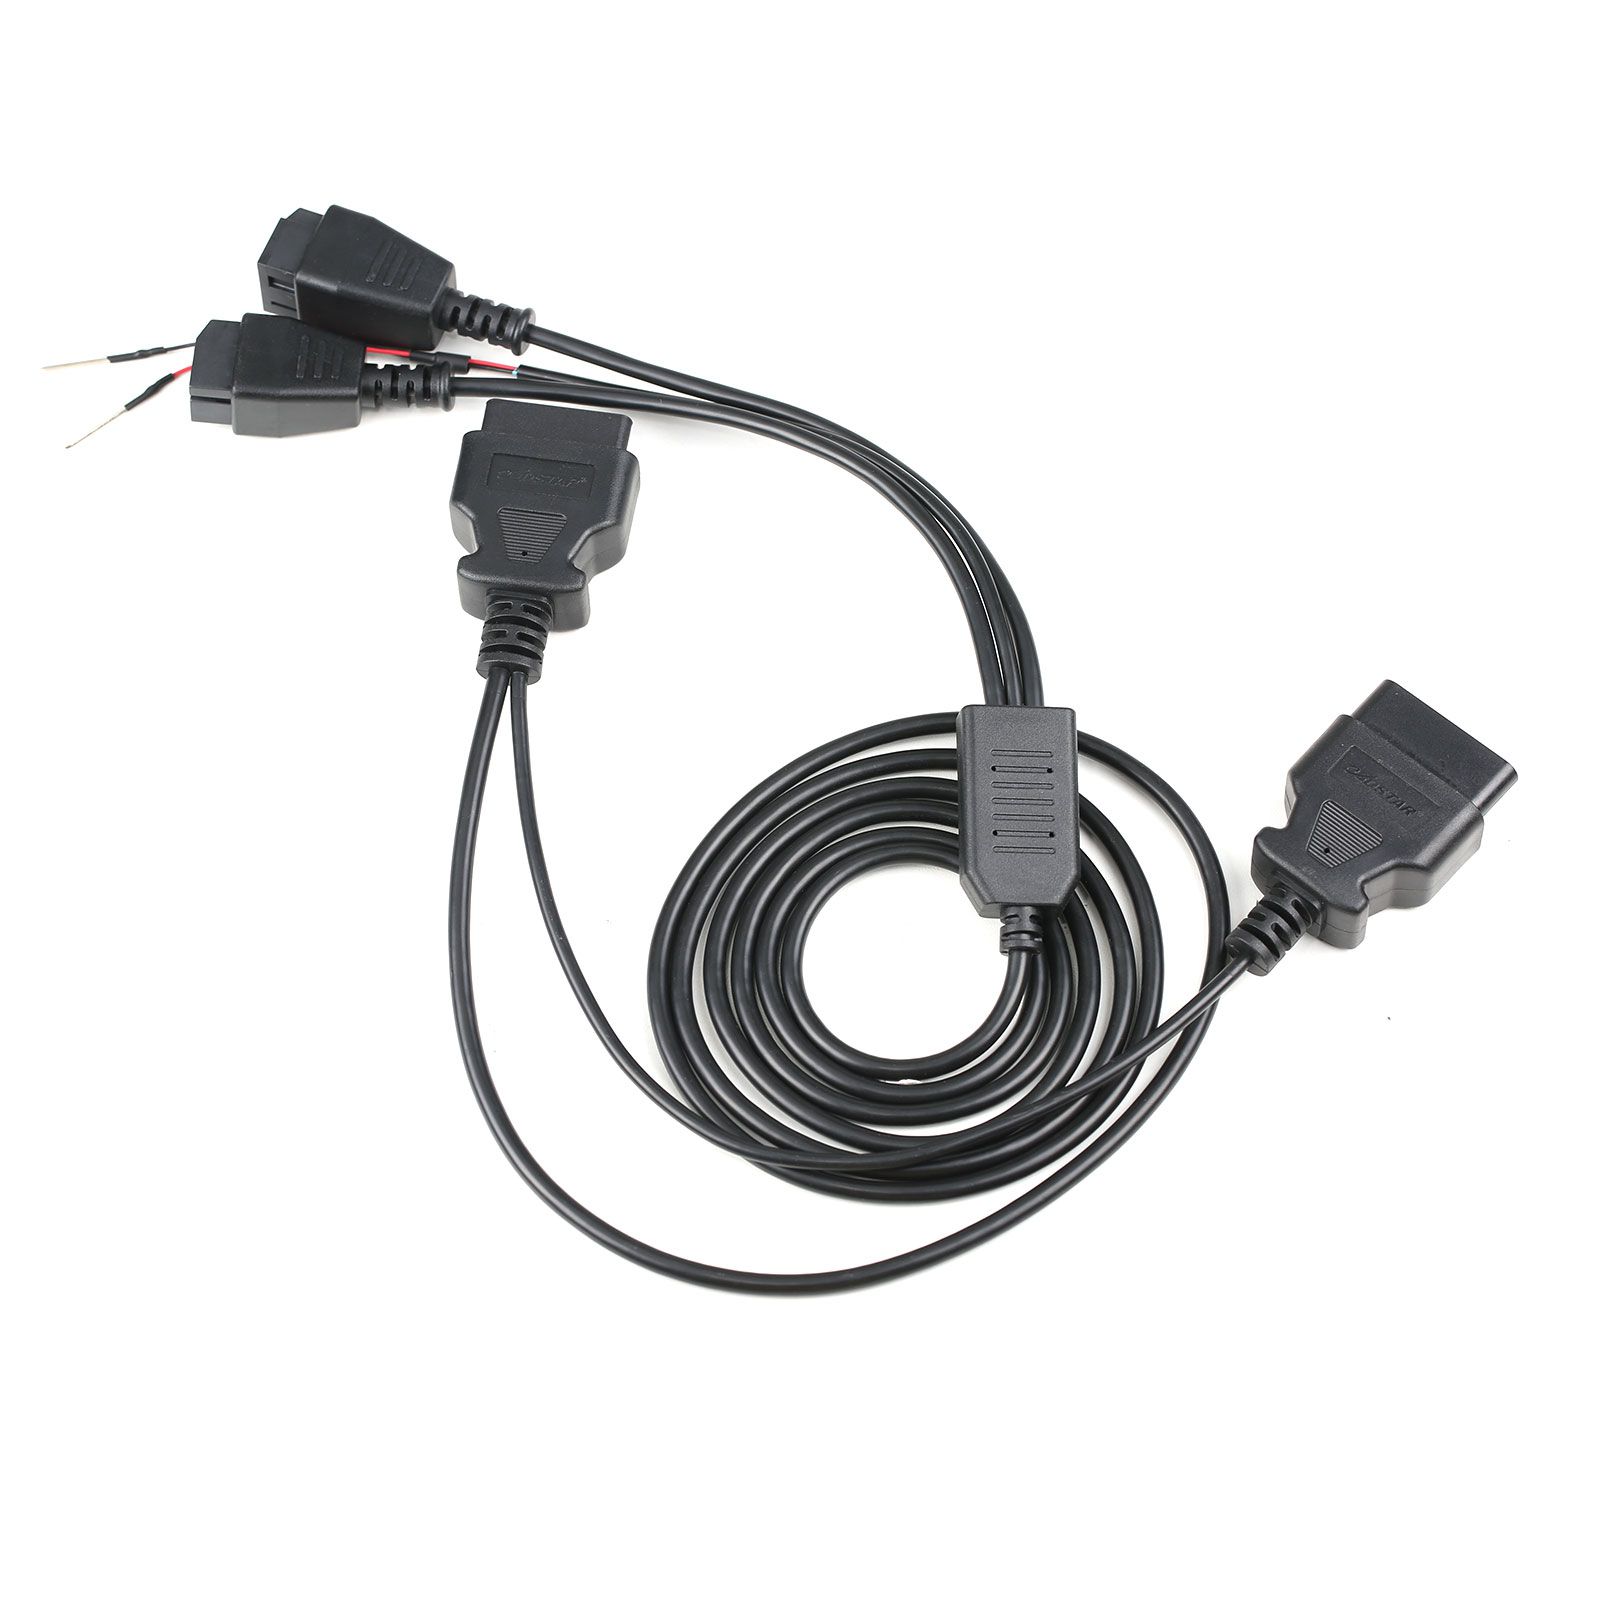 Cable obdstar FCA 12 + 8 para Chrysler X300 DP plus / X300 pro4 / odomaster / X200 PRO2